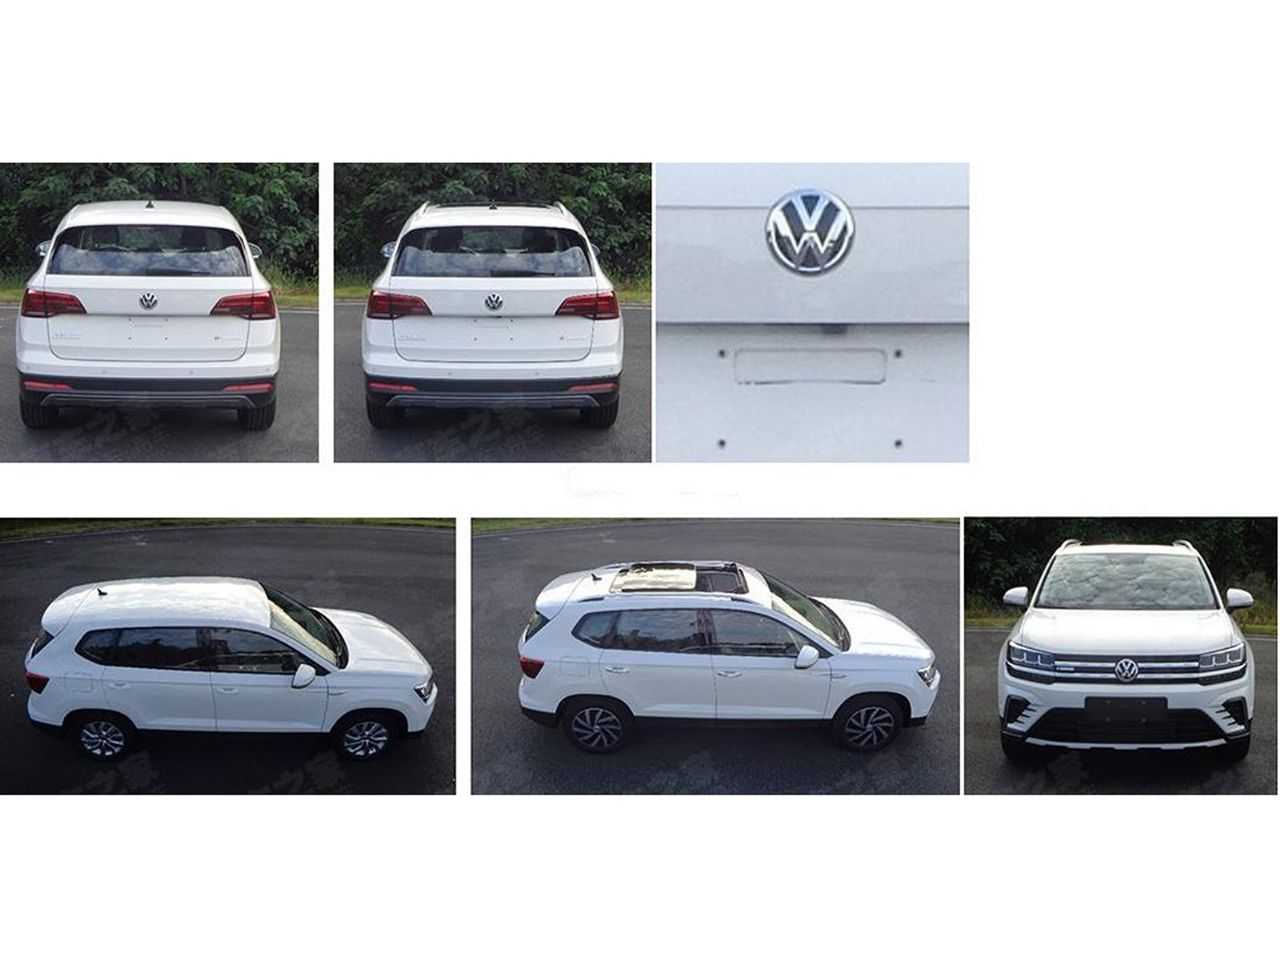 Imagens da futura opo eltrica do SUV mdio da VW